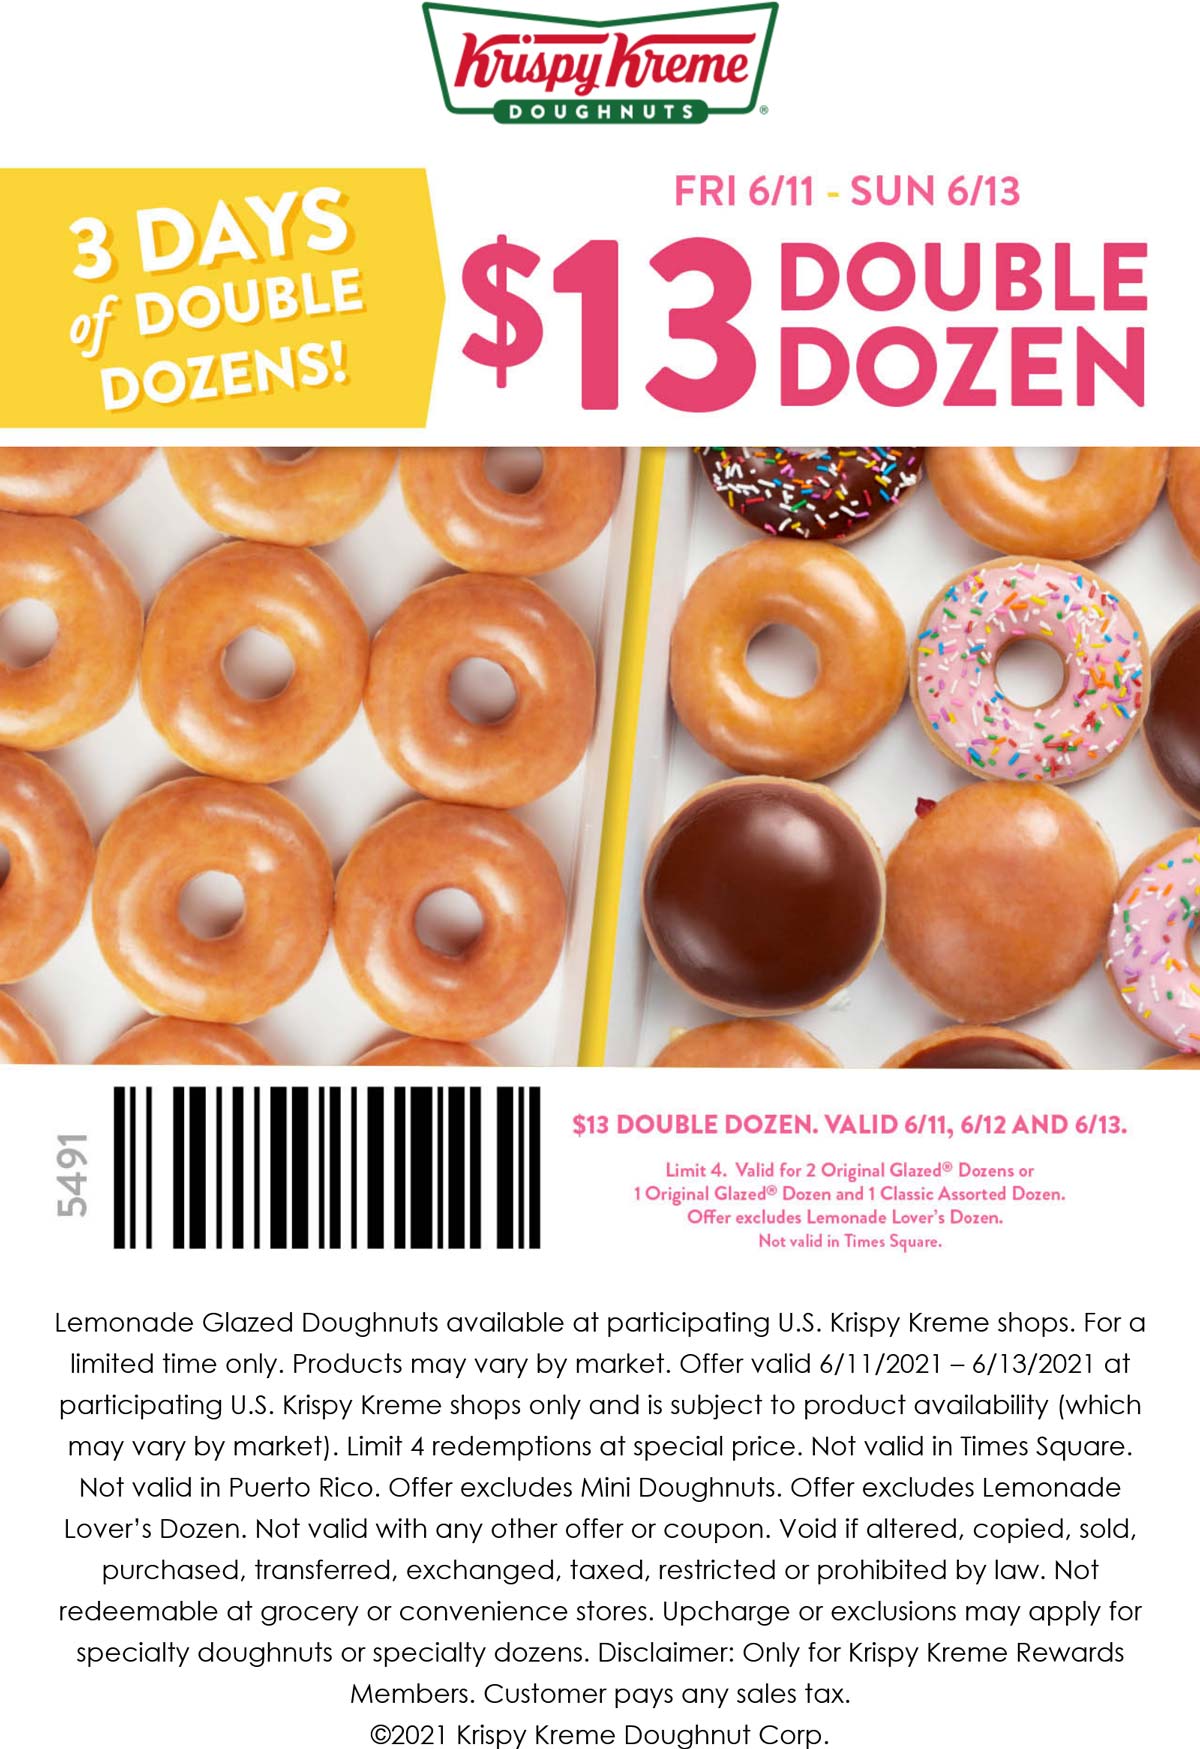 Krispy Kreme restaurants Coupon  $13 double dozen doughnuts at Krispy Kreme #krispykreme 